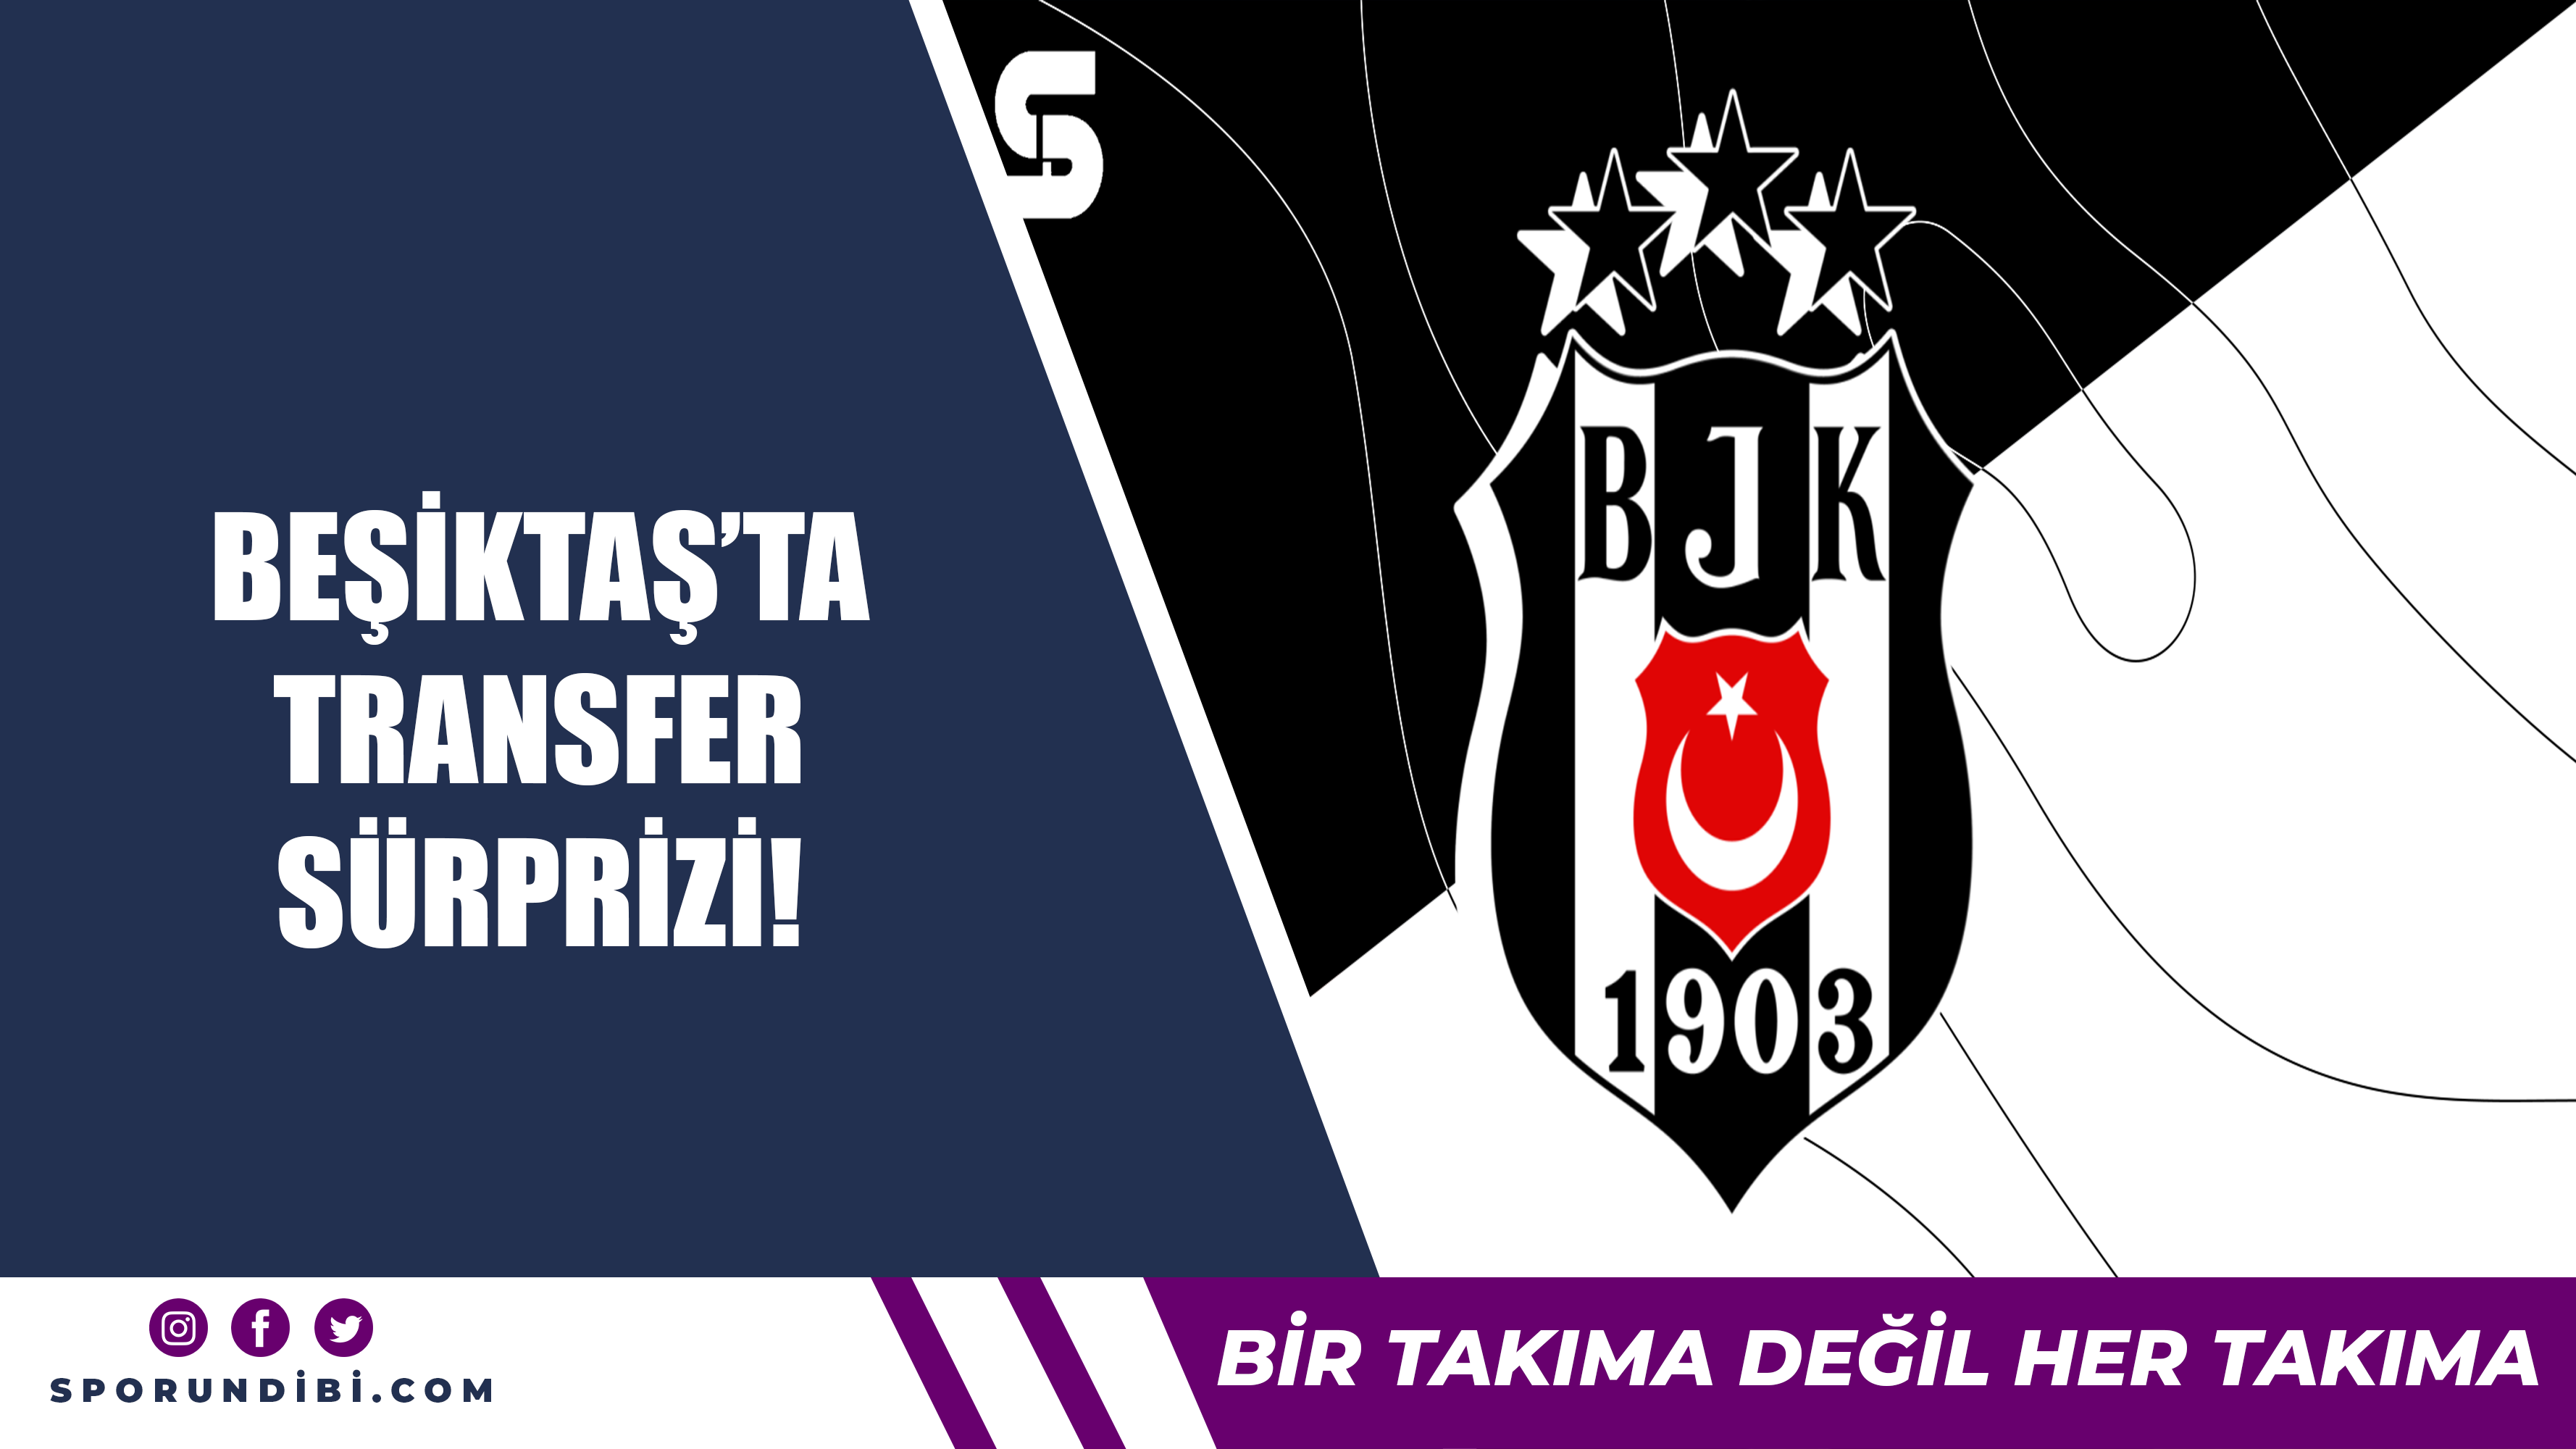 Beşiktaş'ta transfer sürprizi!